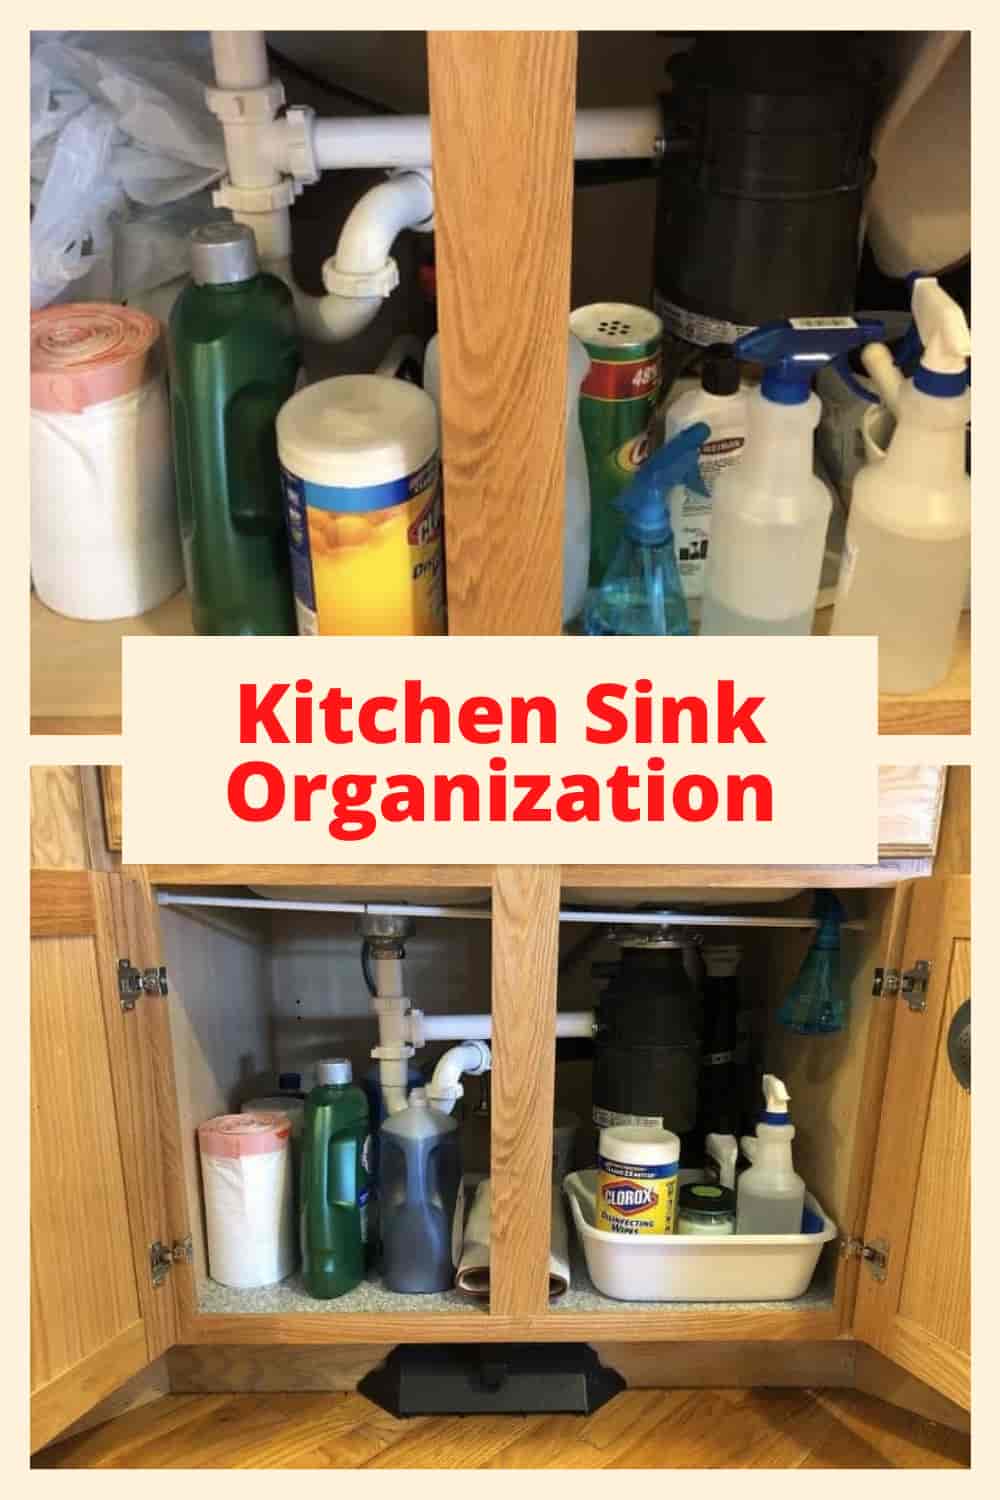 Under Kitchen Sink Organization Ideas: Easy and Beautiful DIYs